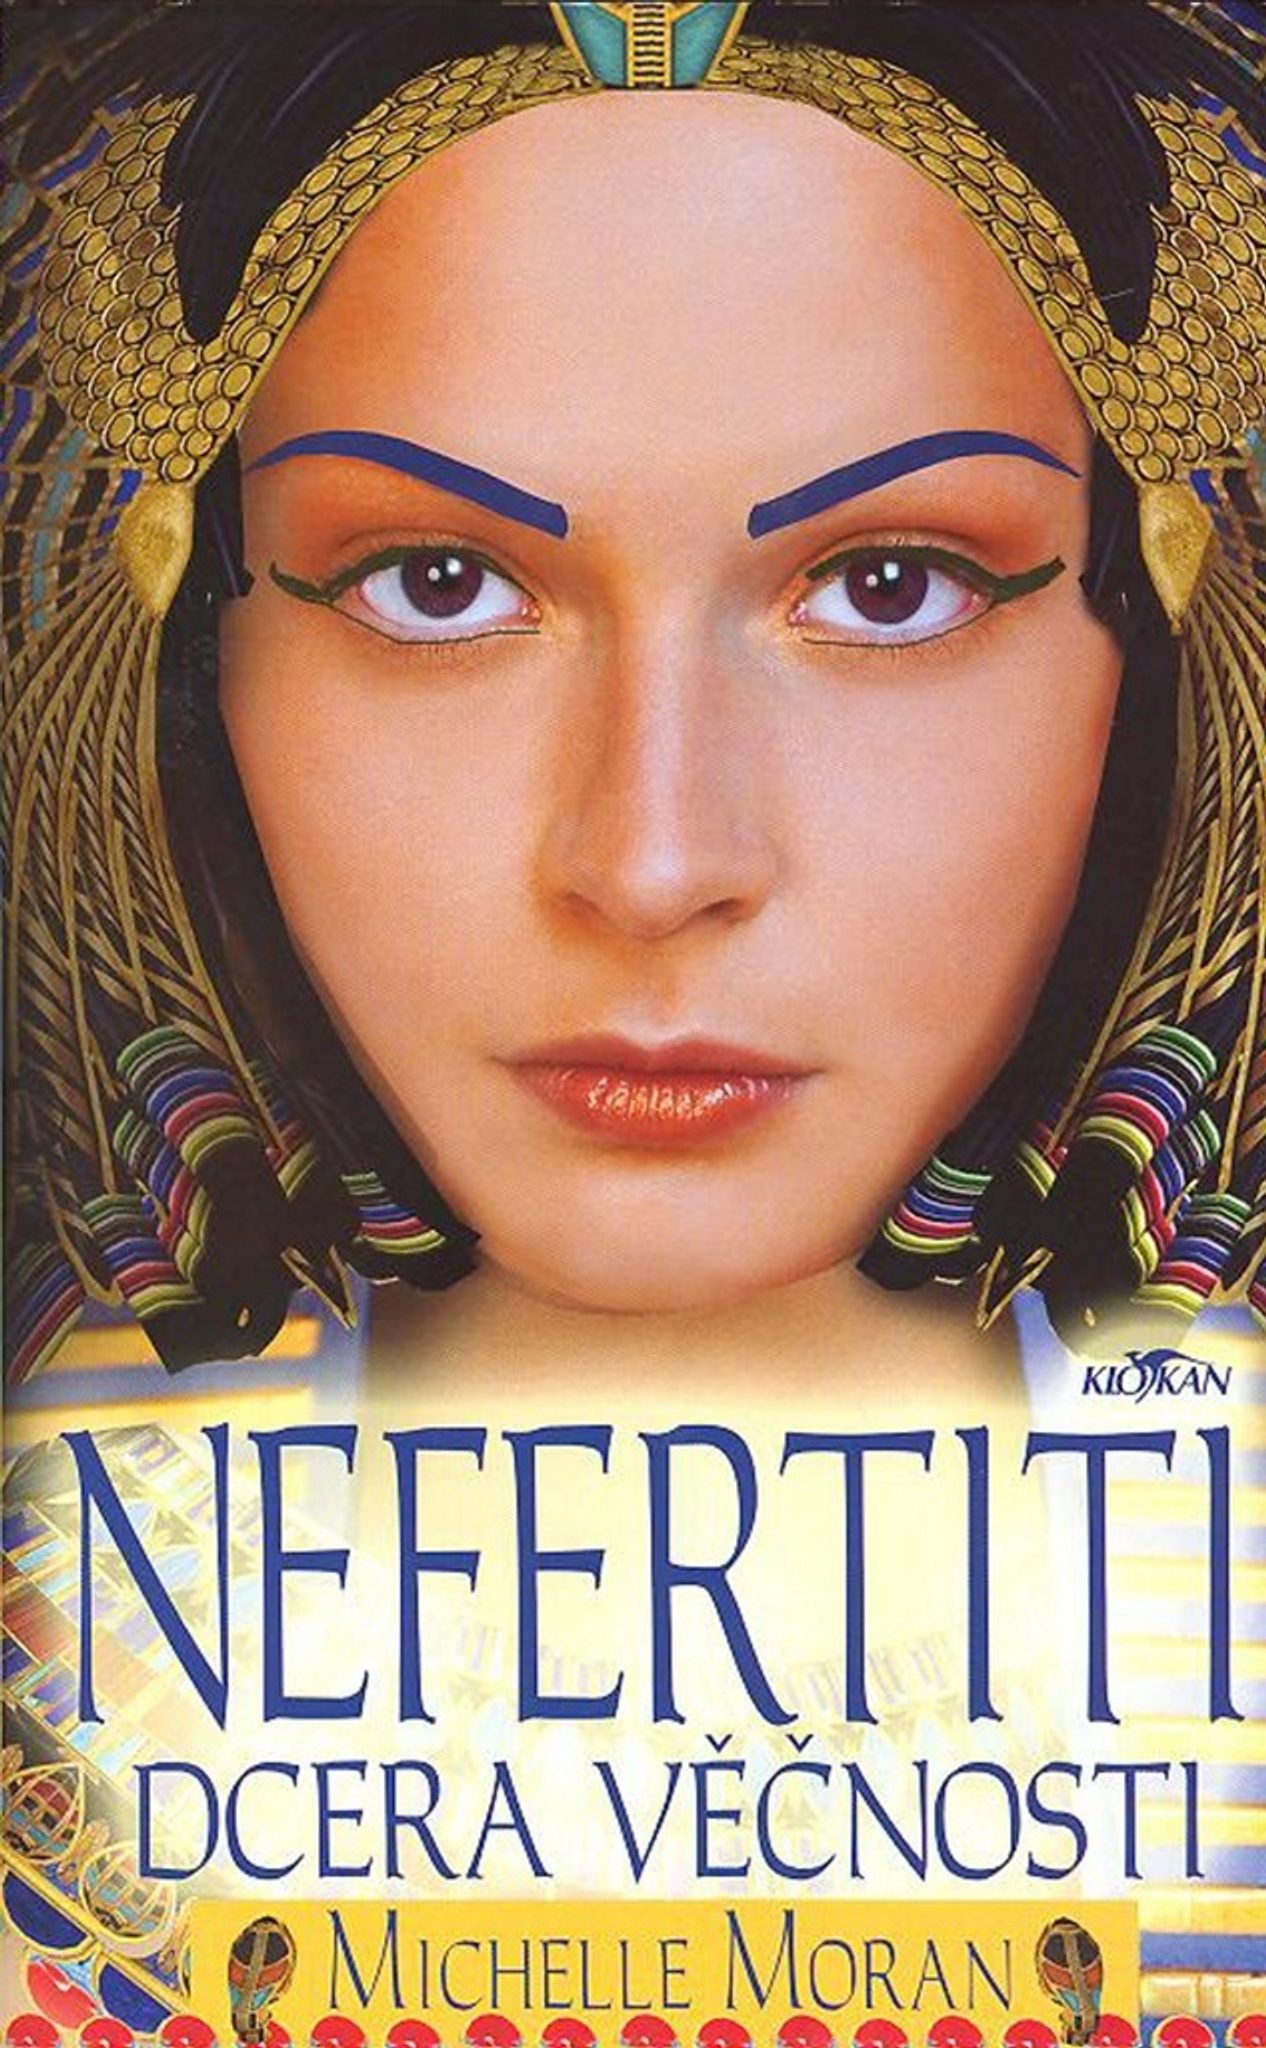 Nefertiti - Dcera vnosti